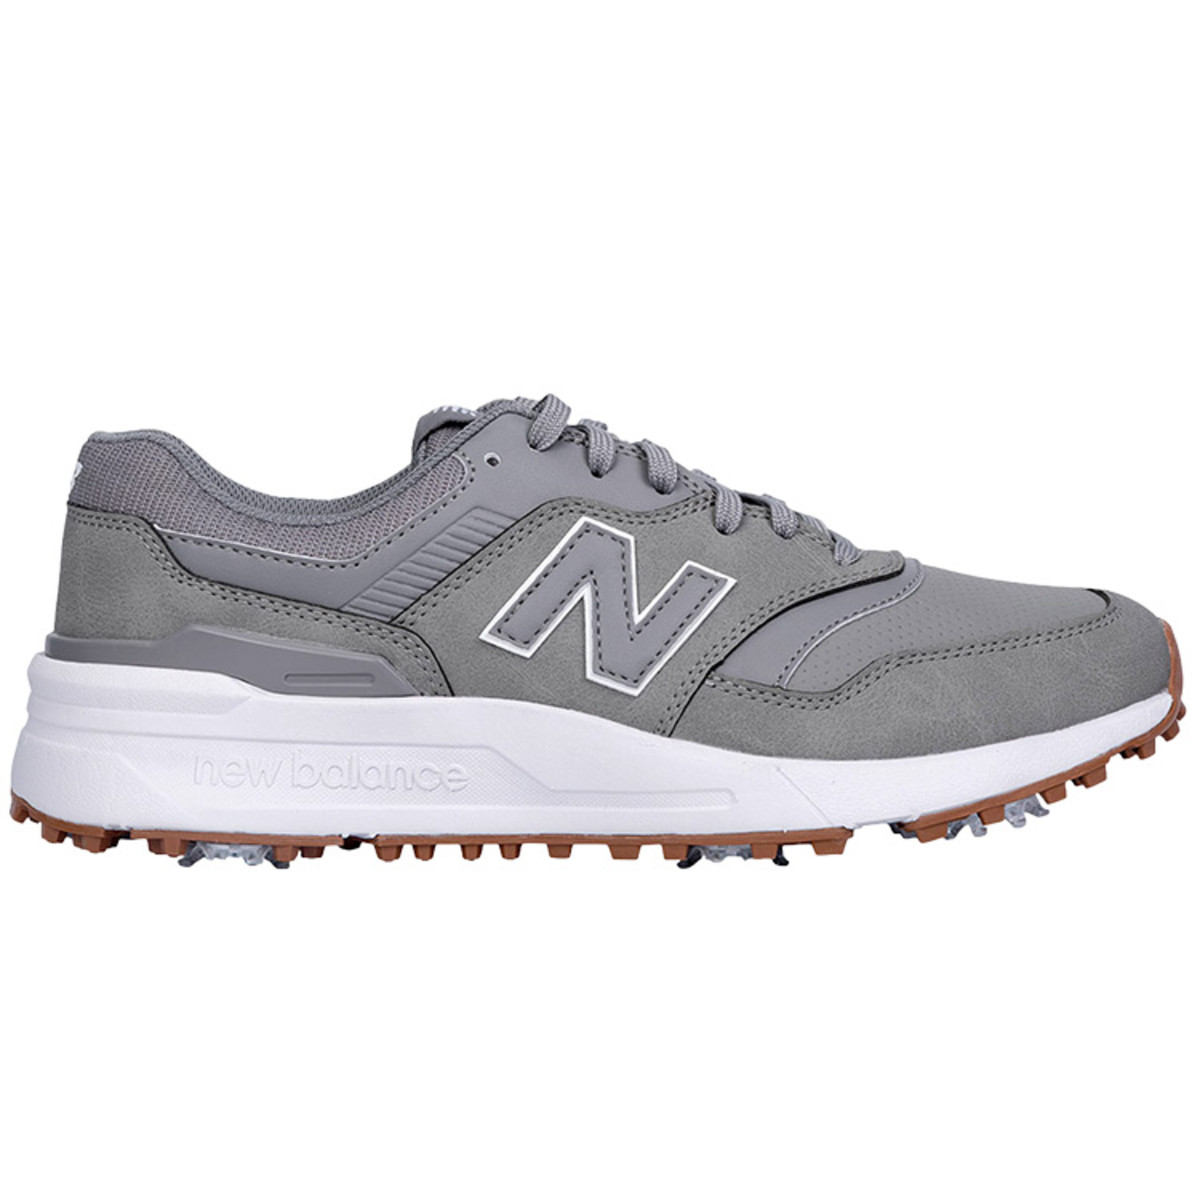 New Balance 997 Golf Shoes